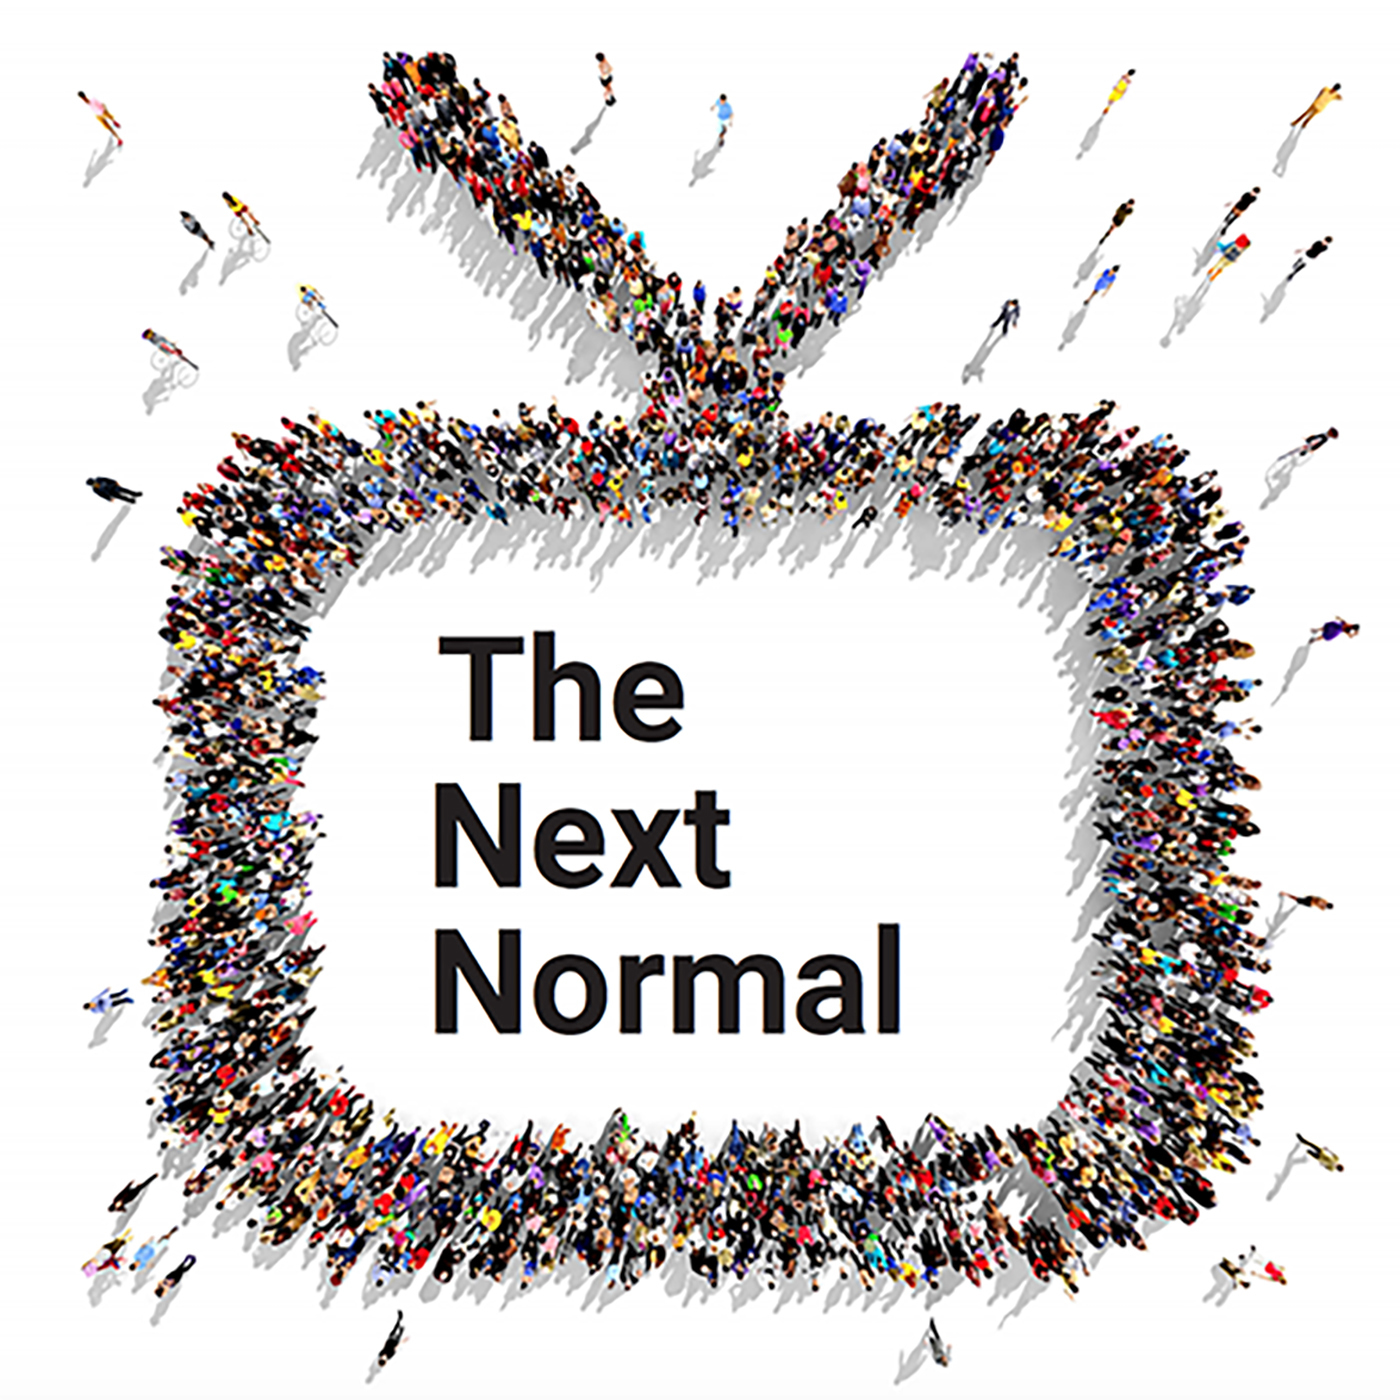 Jenn Kuzmyk & Liza Sardi on 'The Next Normal' for the screen industries